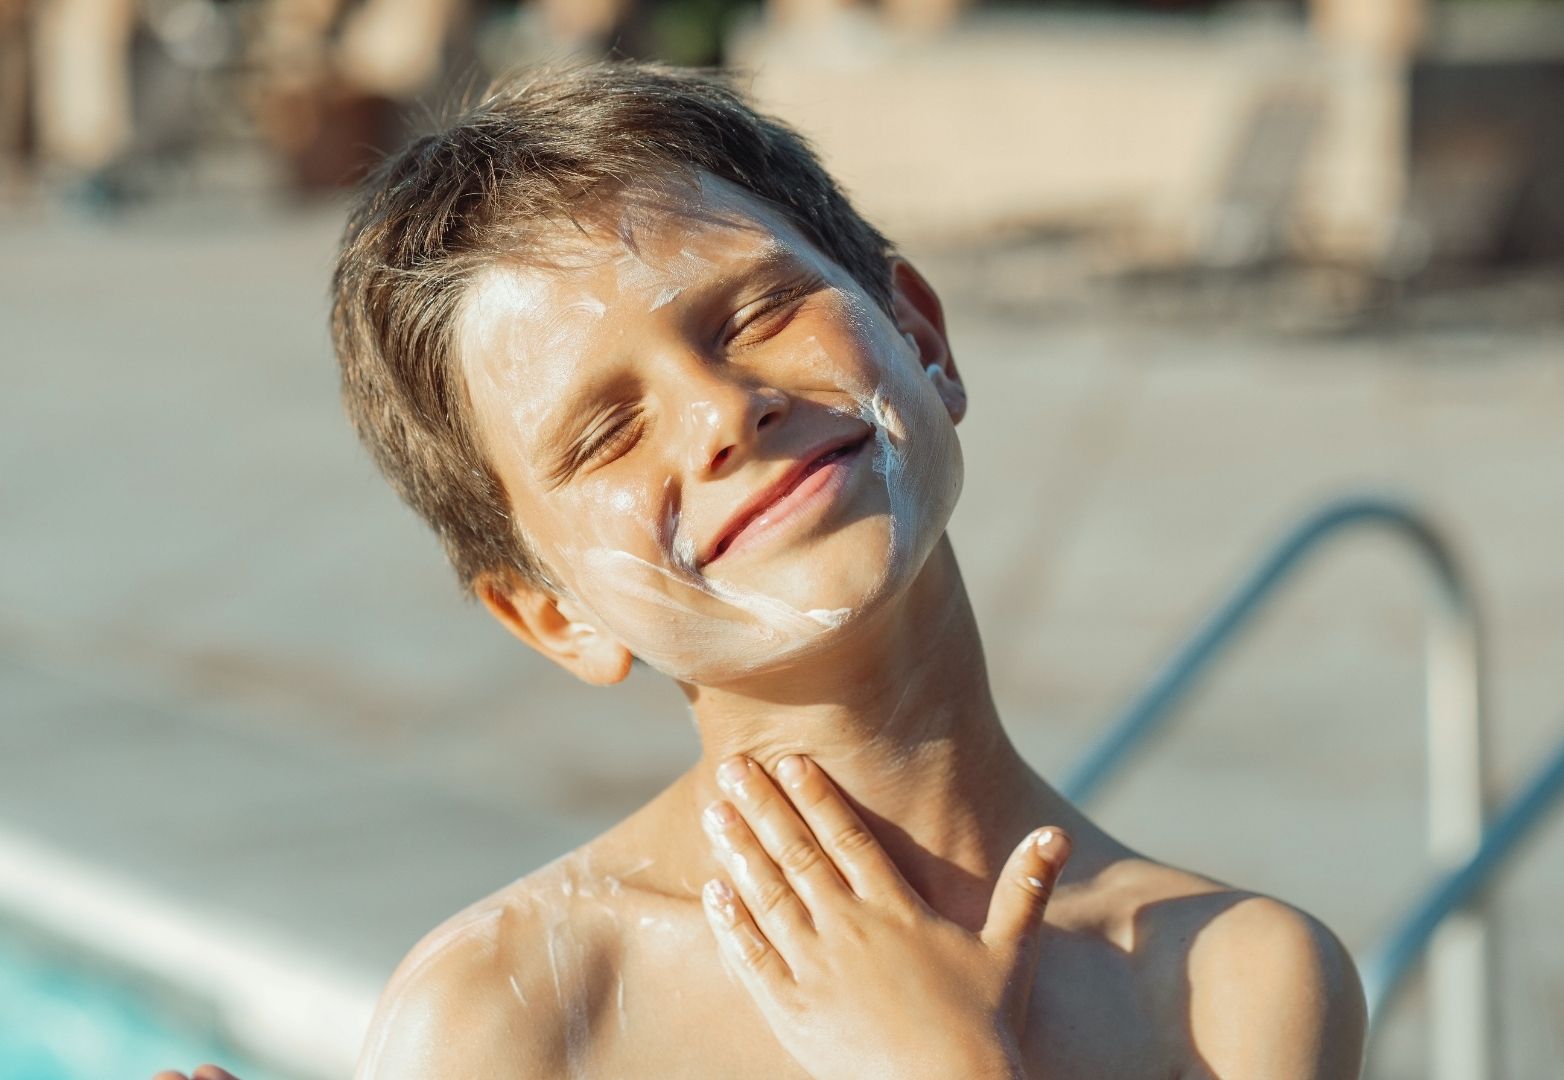 Kid applying sunscreen